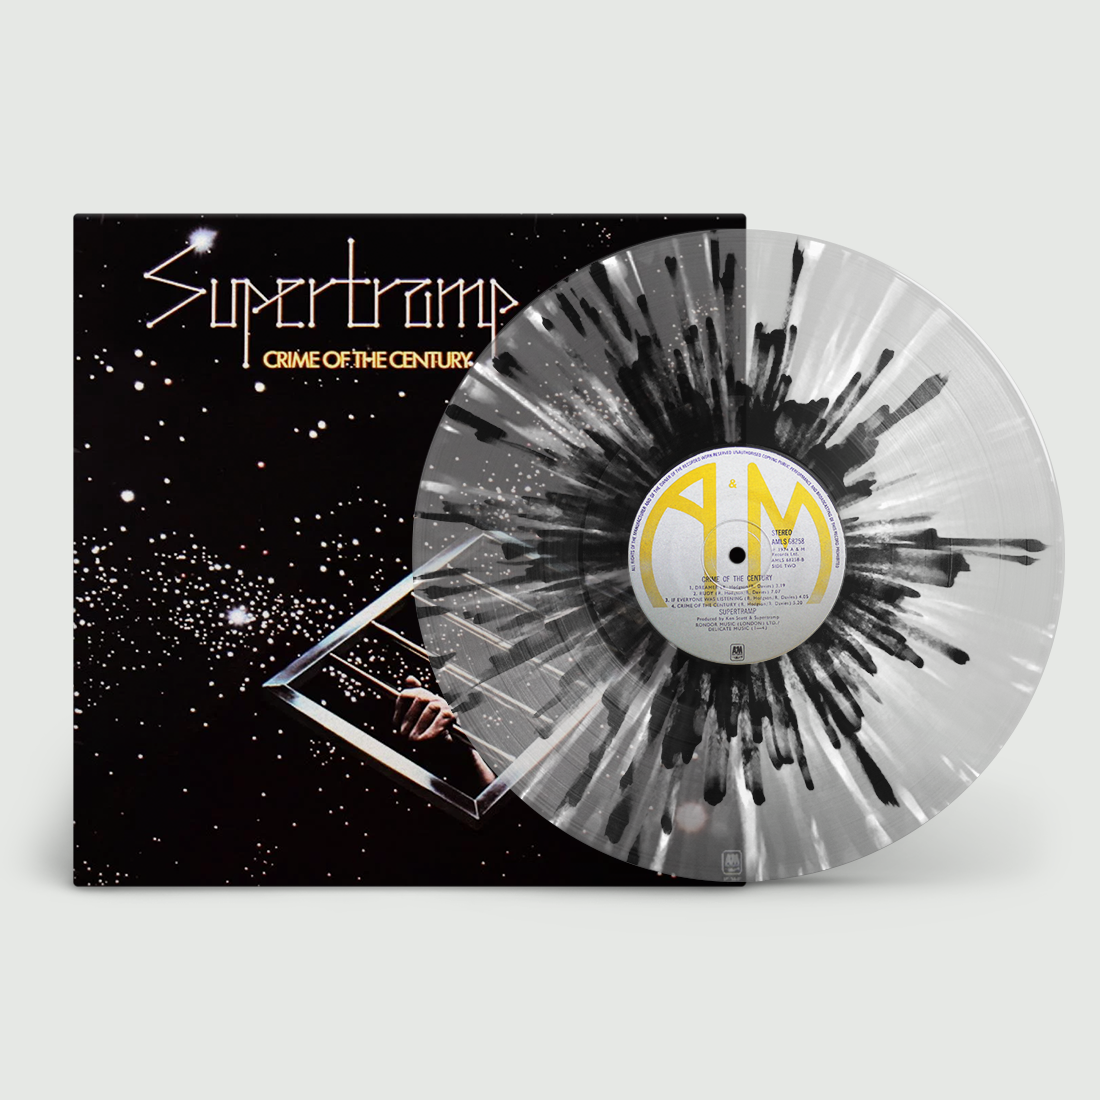 Supertramp - The Very Best of. Single vinilo 7